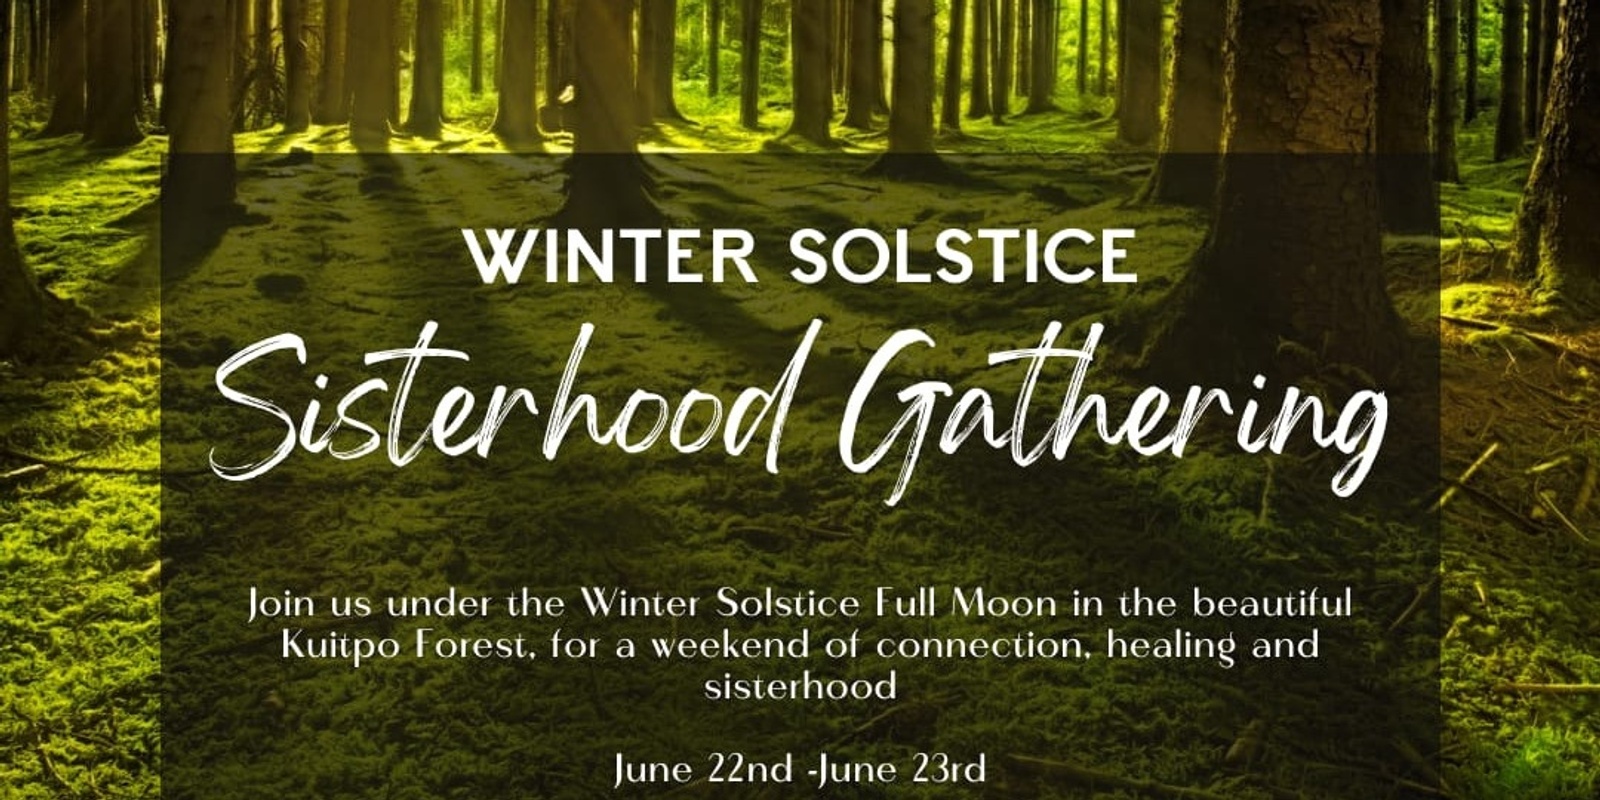 Banner image for Winter Solstice Sisterhood Gathering